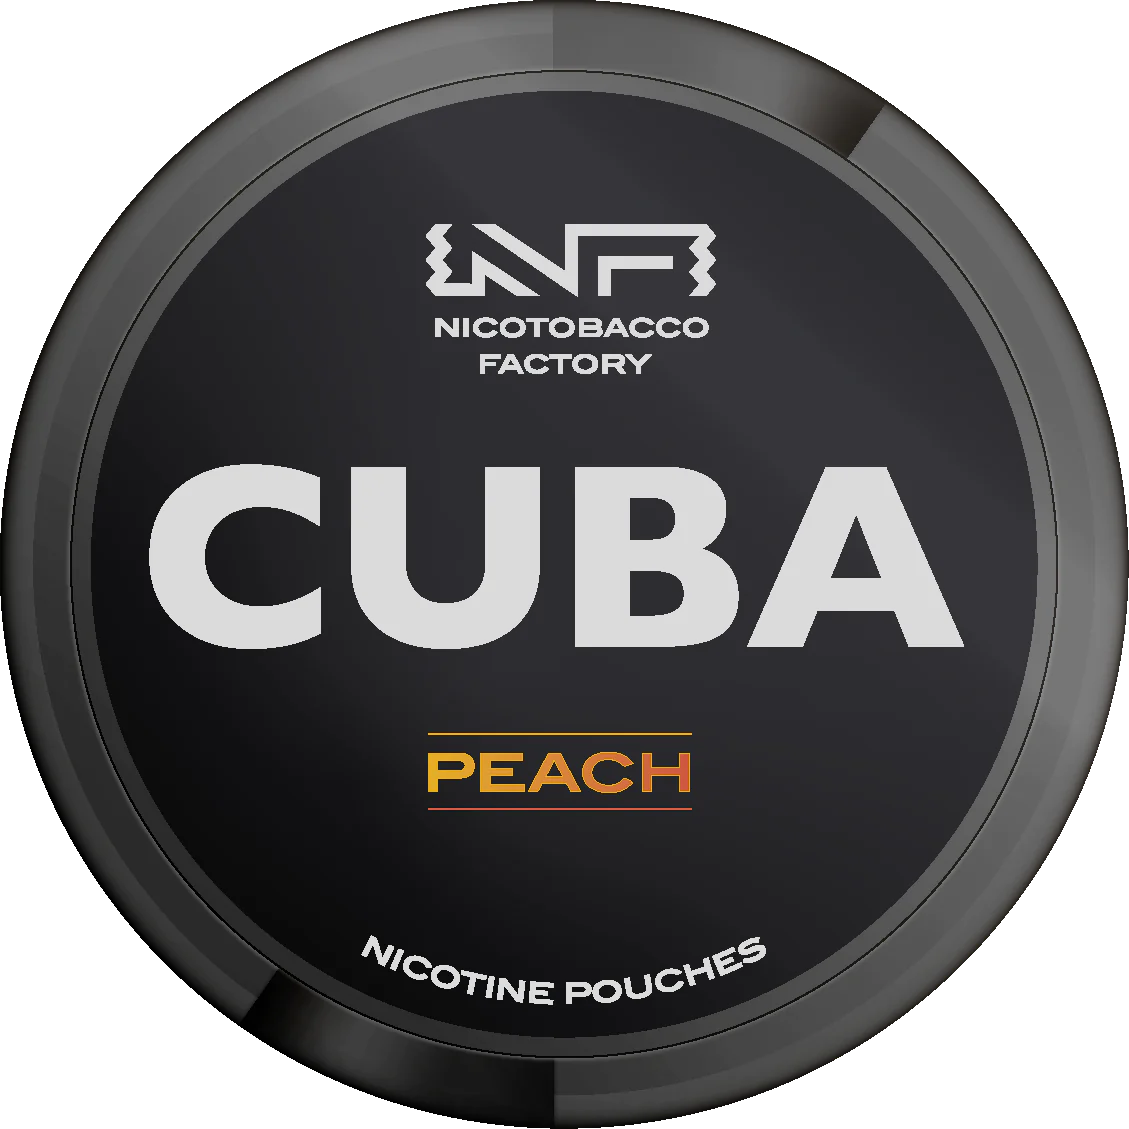 Cuba Peach - 43mg